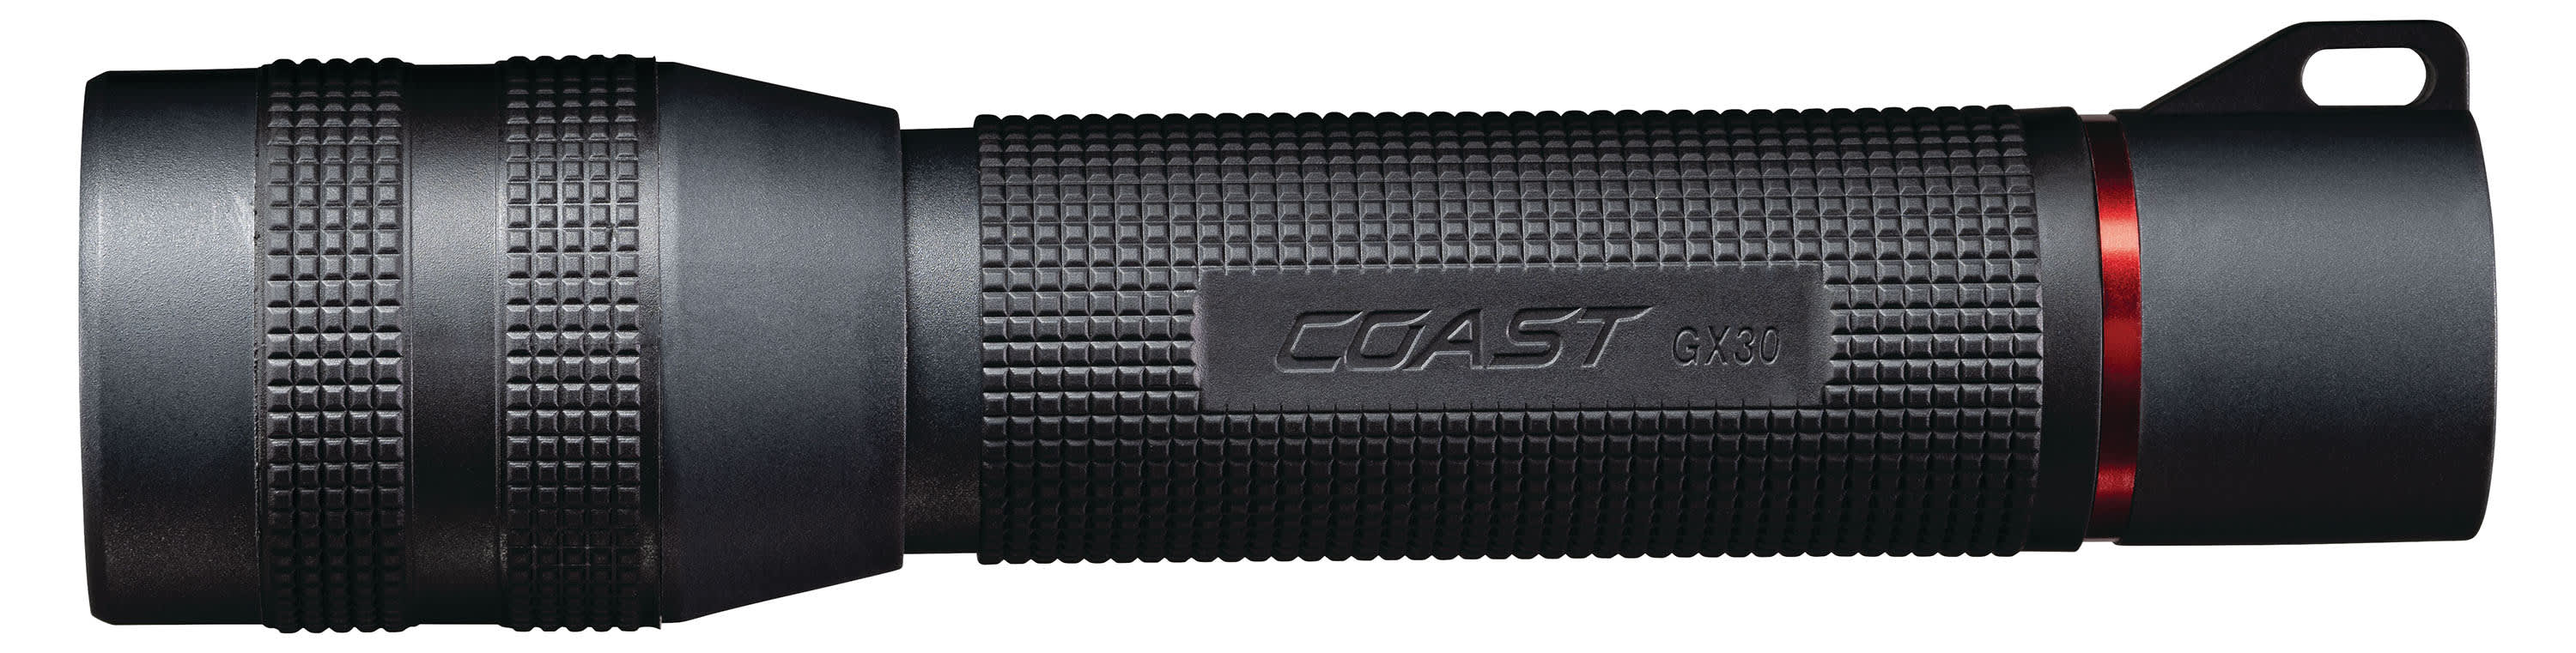 Coast GX30 Flashlight